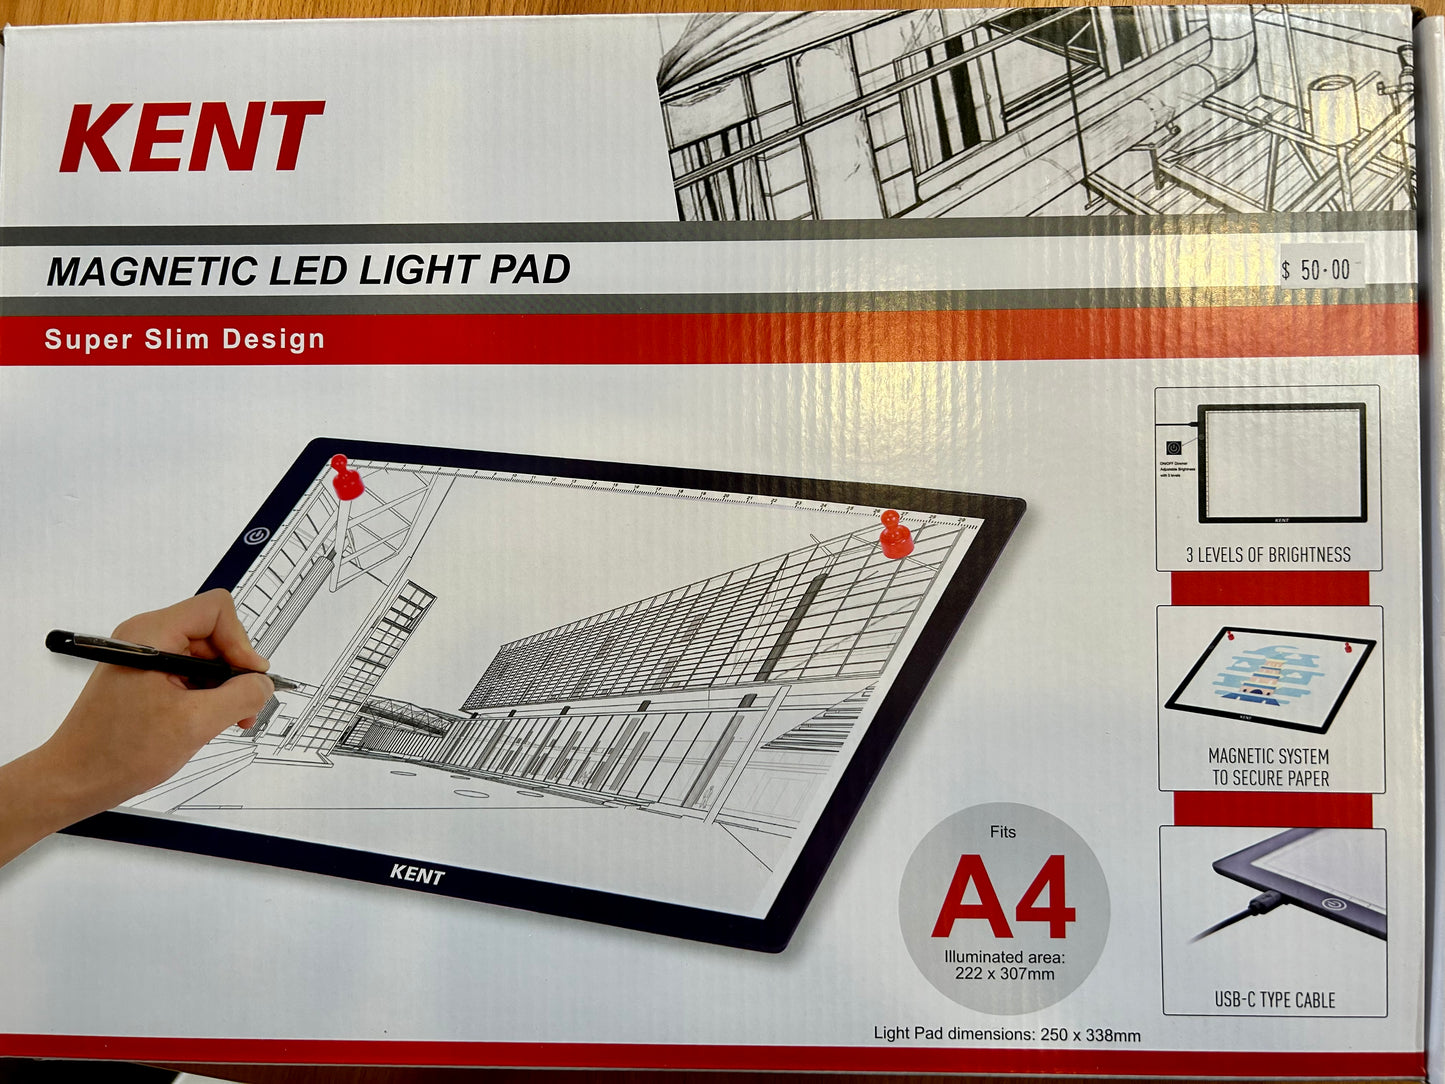 A4 LED Light Pad